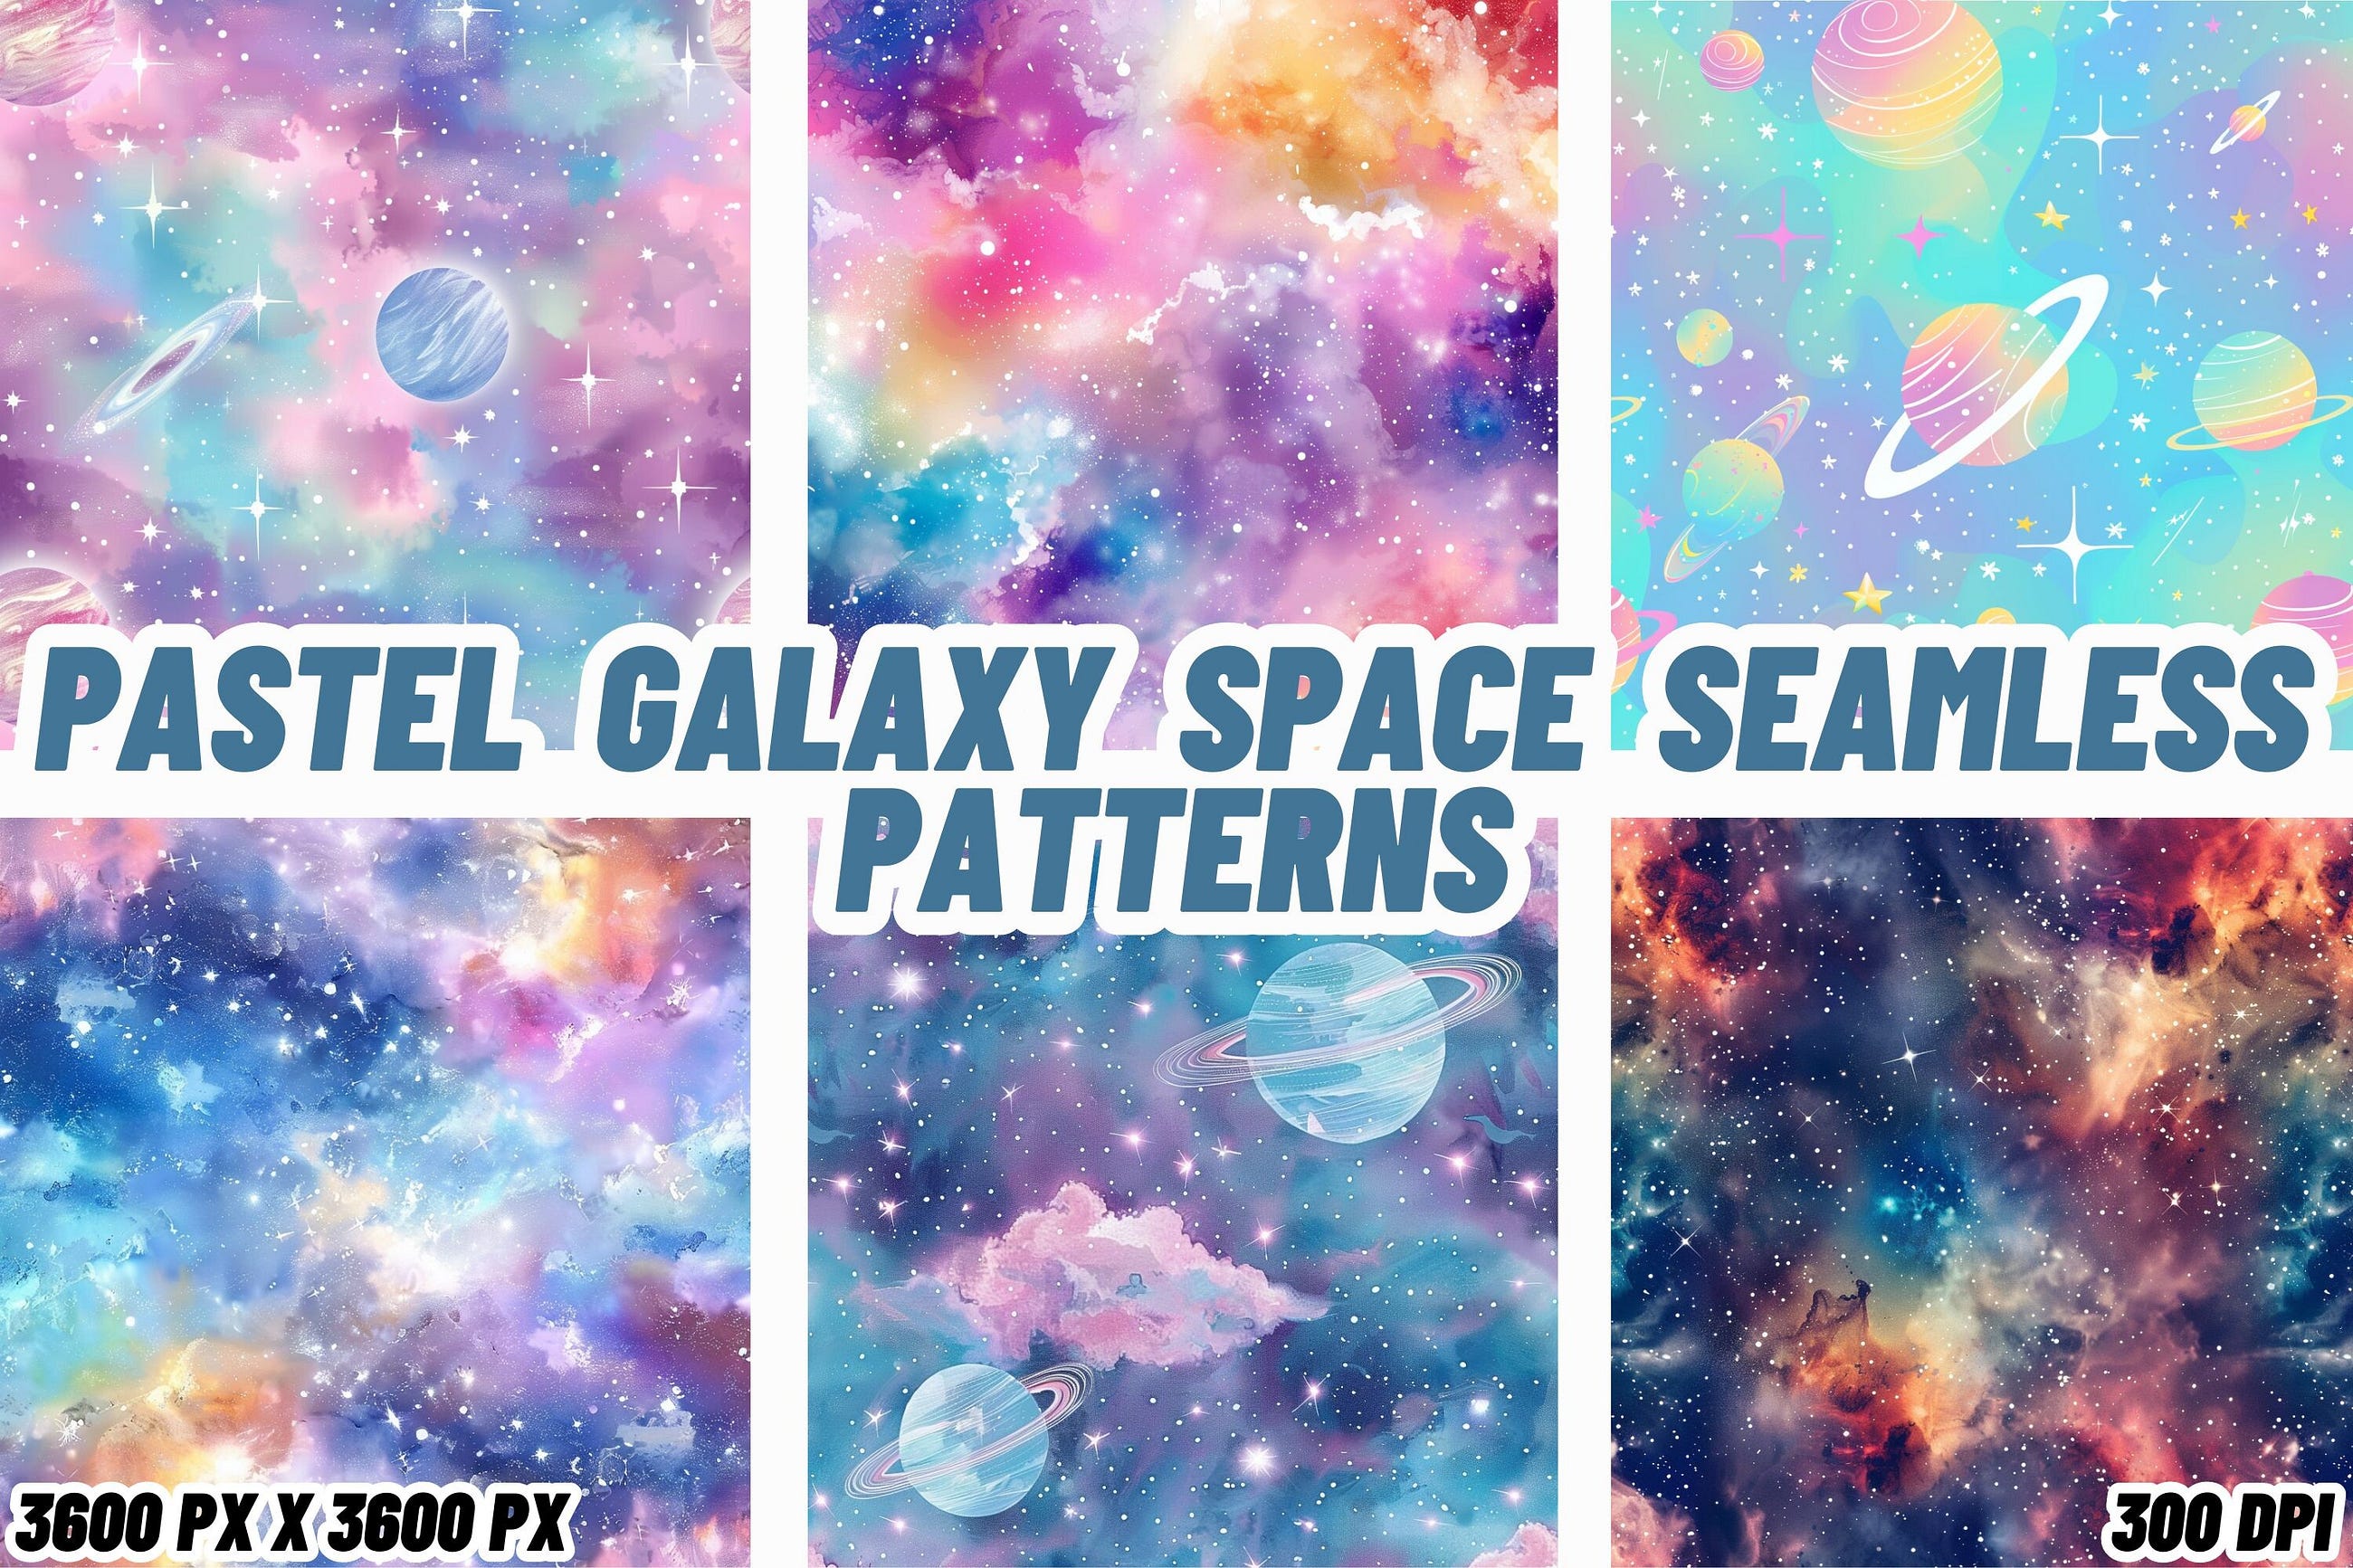 Pastel Galaxy Space Seamless Patterns Free Download